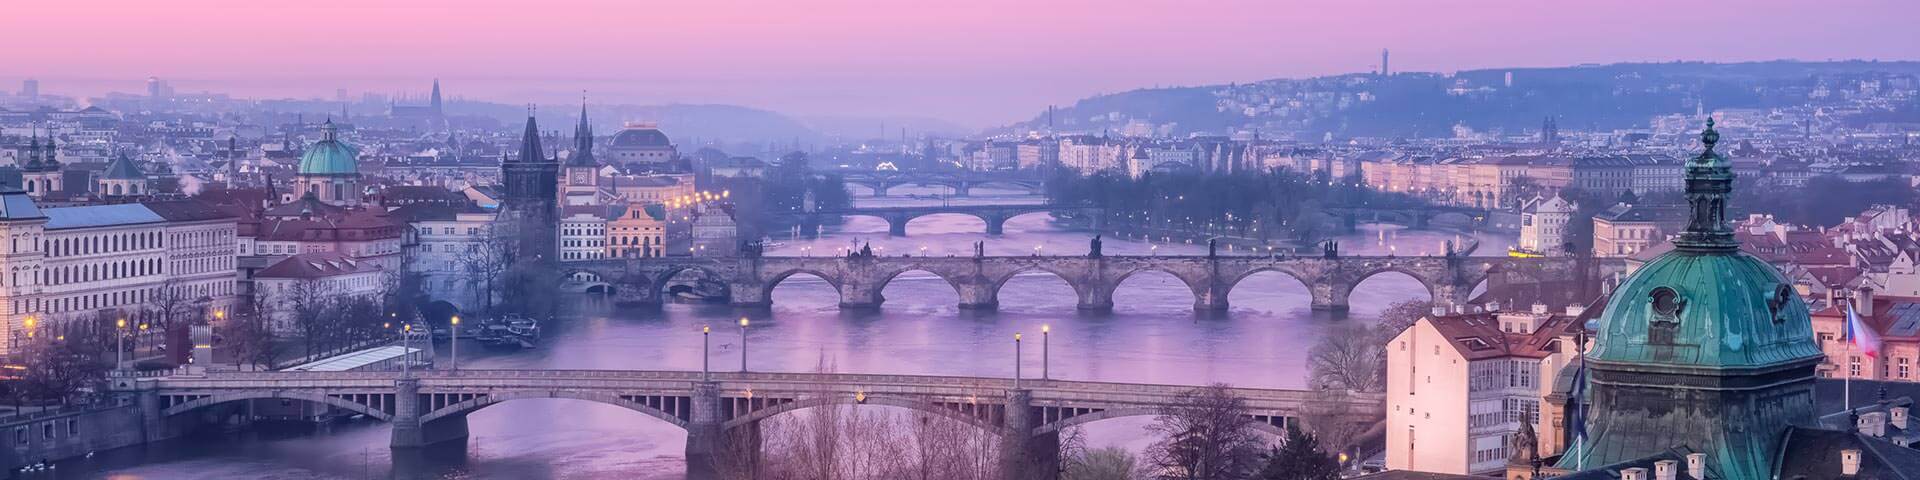 Prague Panorama, Czech Republic